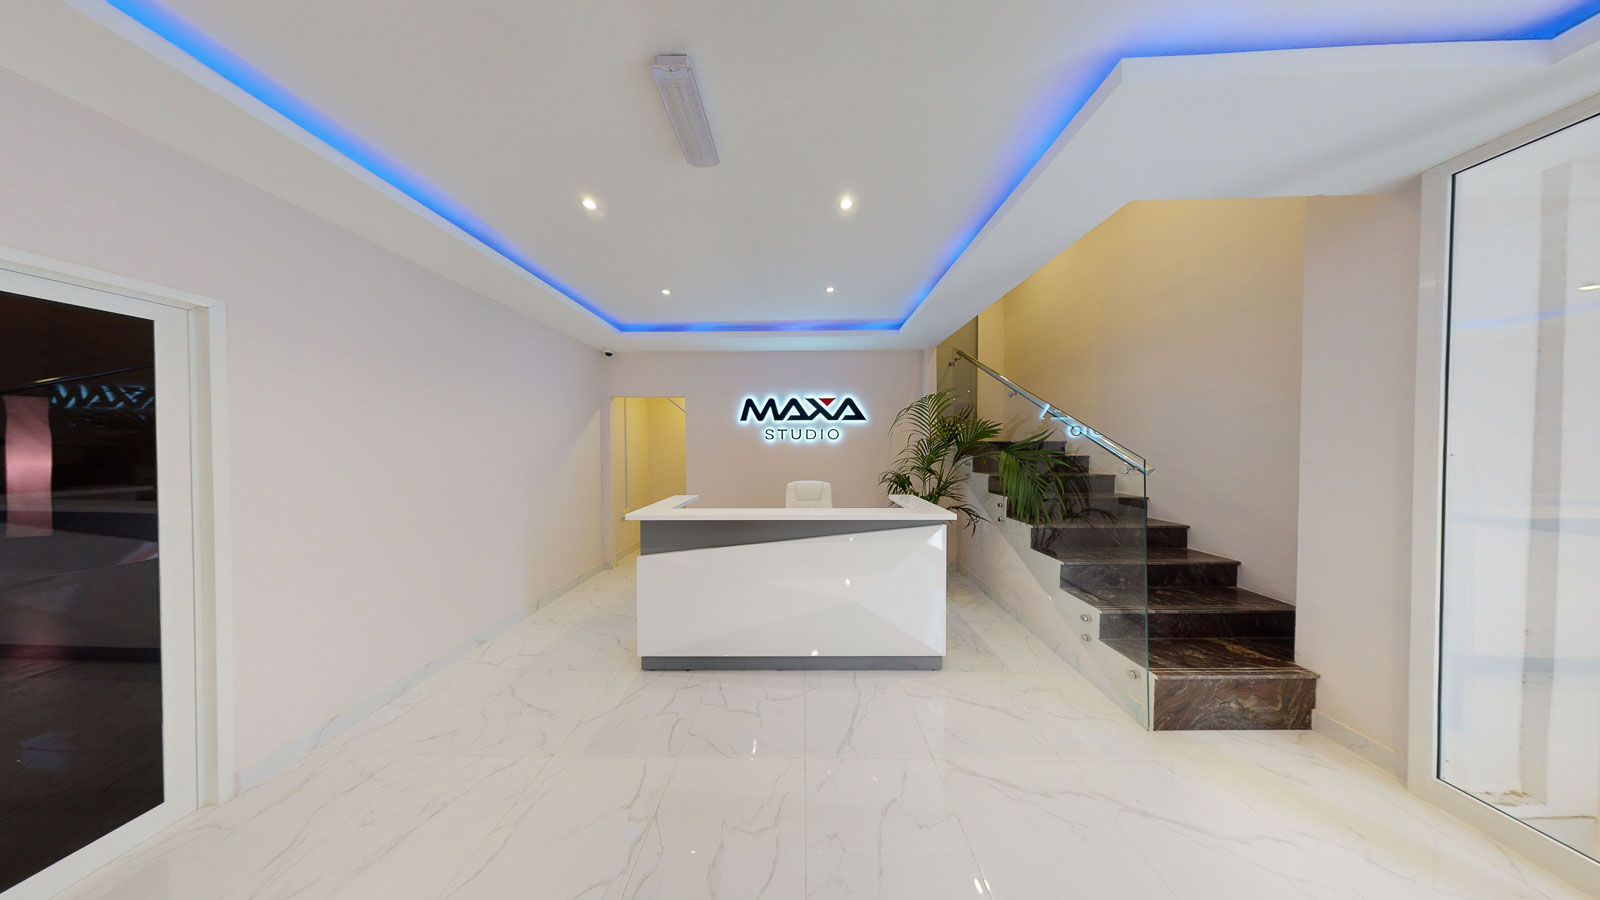 MAXA Studio